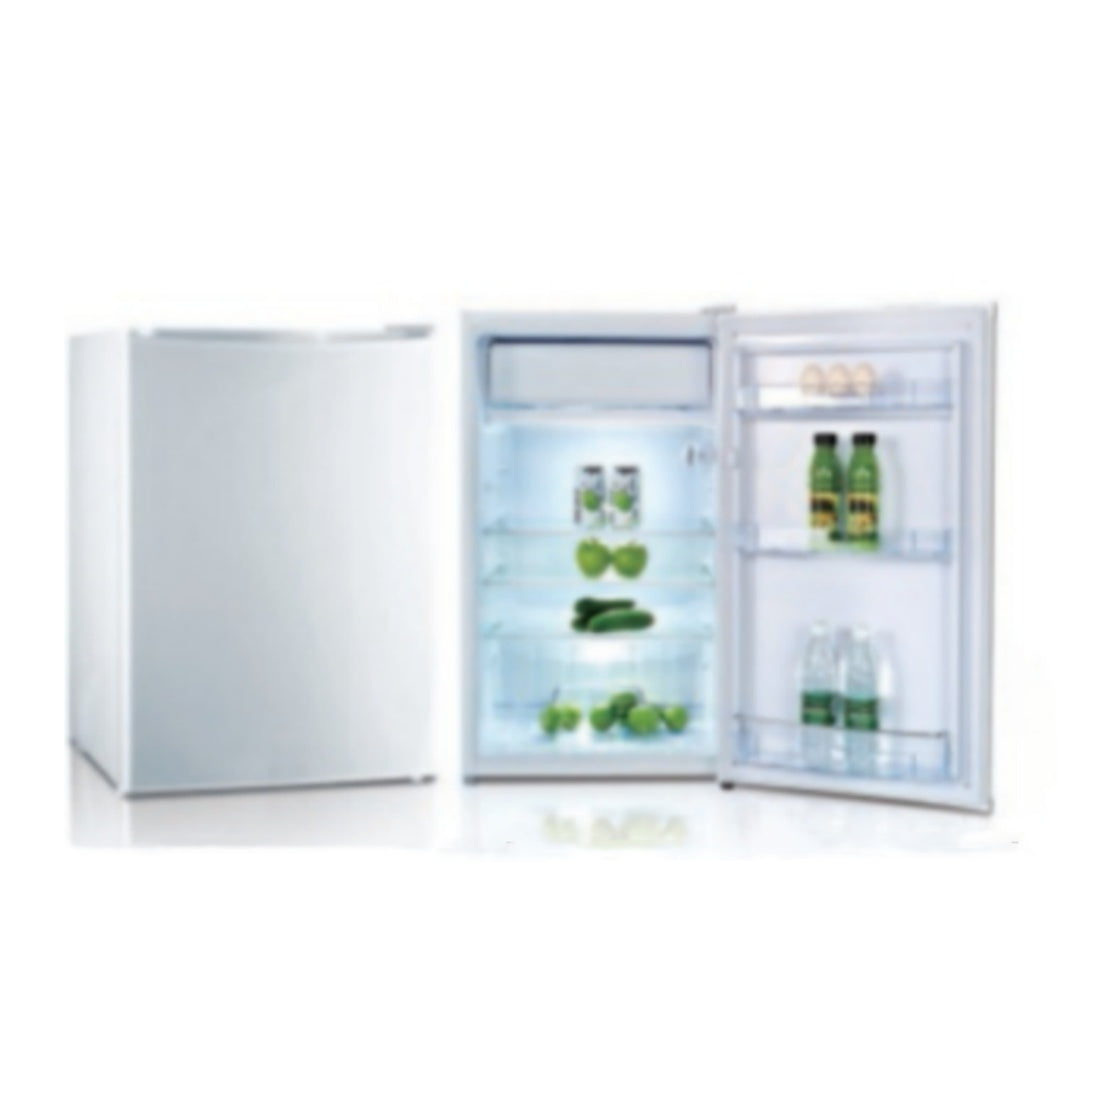 GARVEE 122L Refrigerator Single Door Refrigerator for Apartment Bedroom Dorm and Office White